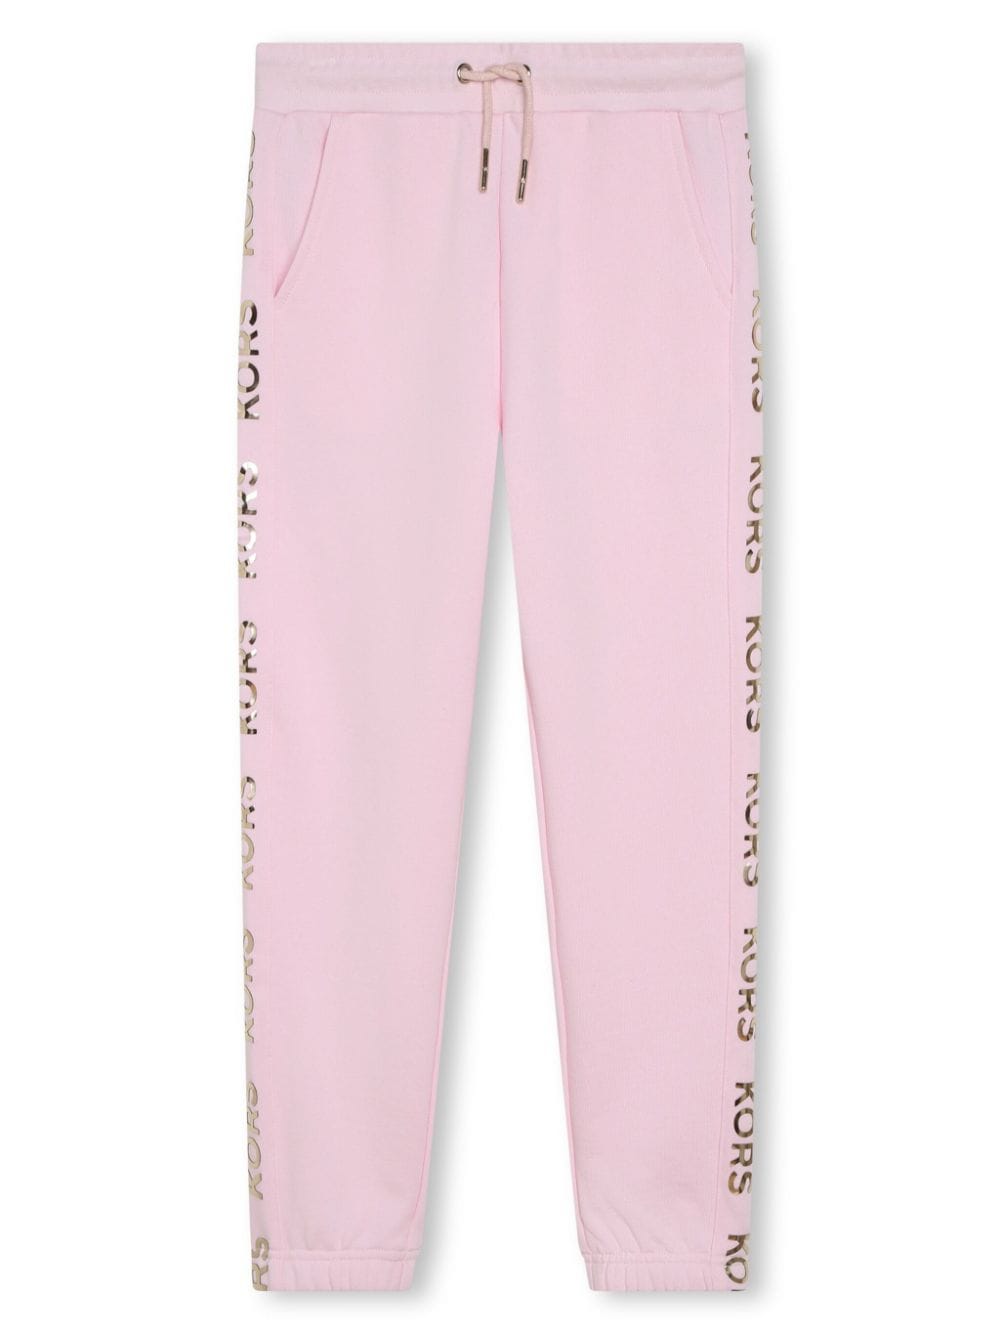 Pantalone rosa per bambina con logo